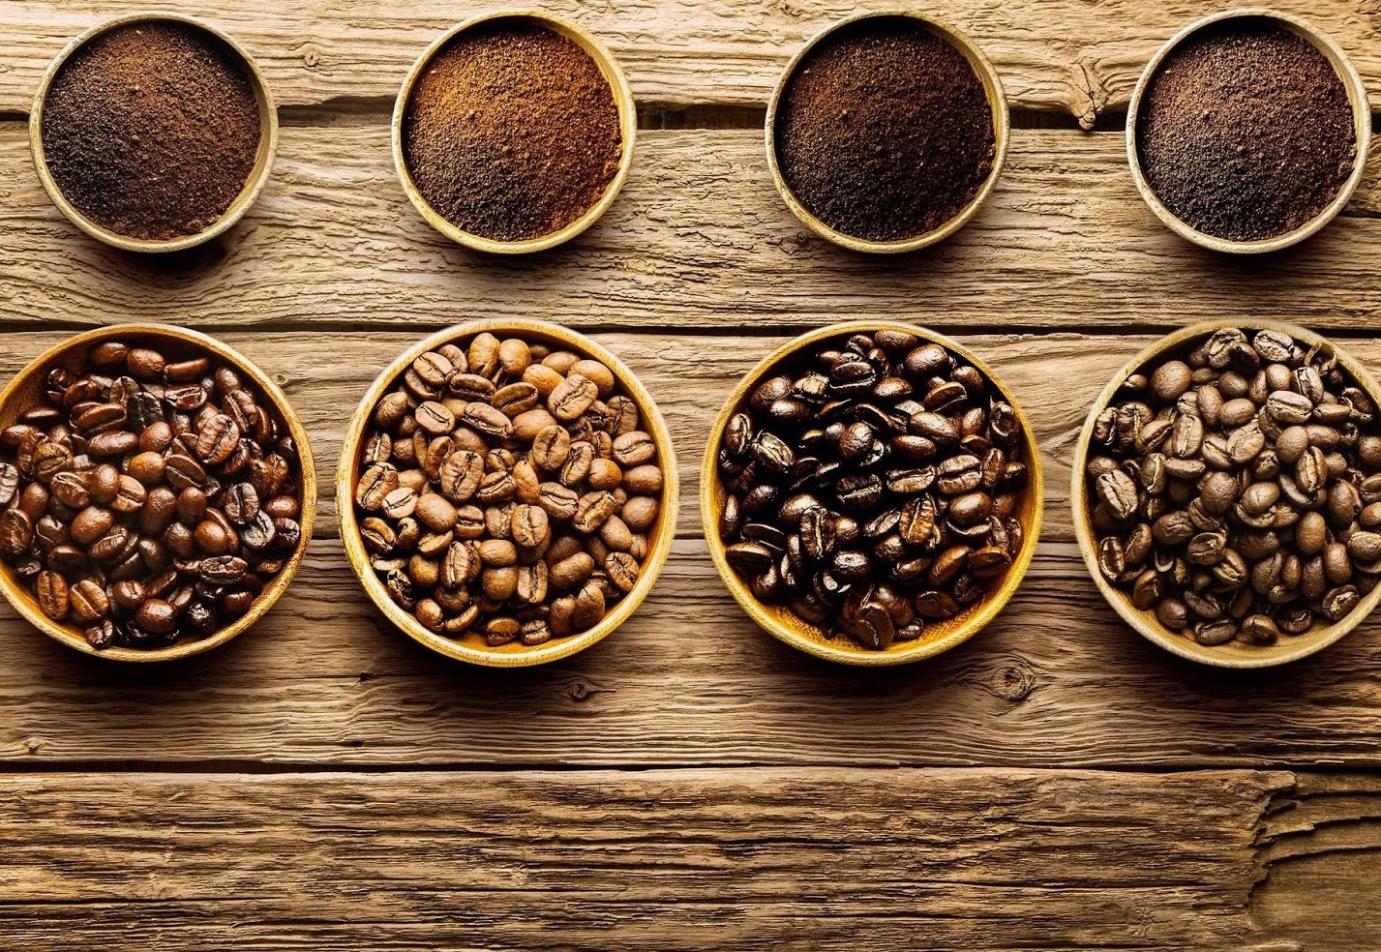 Provide quality grain coffee